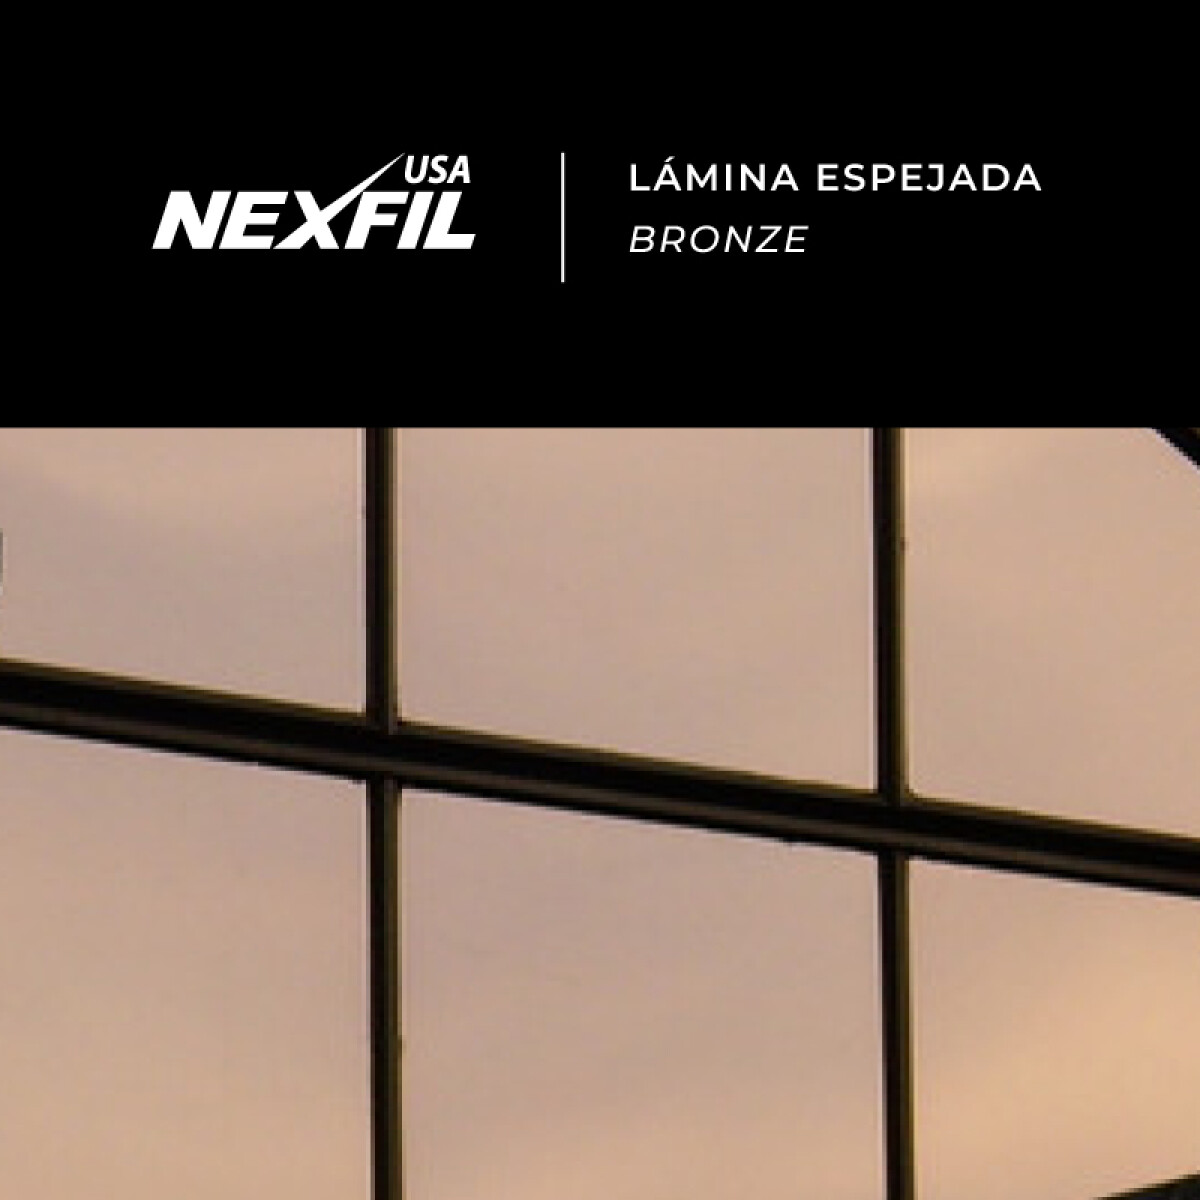 Lamina Espejada Bronze - Nexfil 